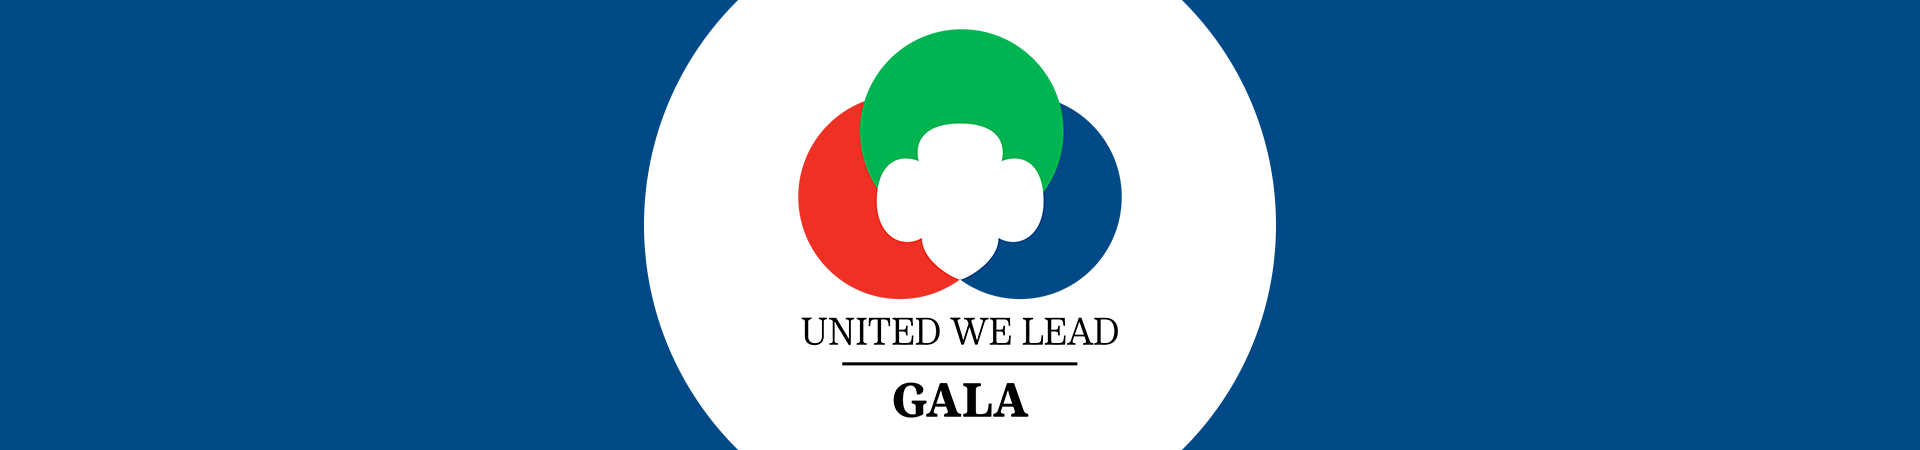  united we lead gala logo 